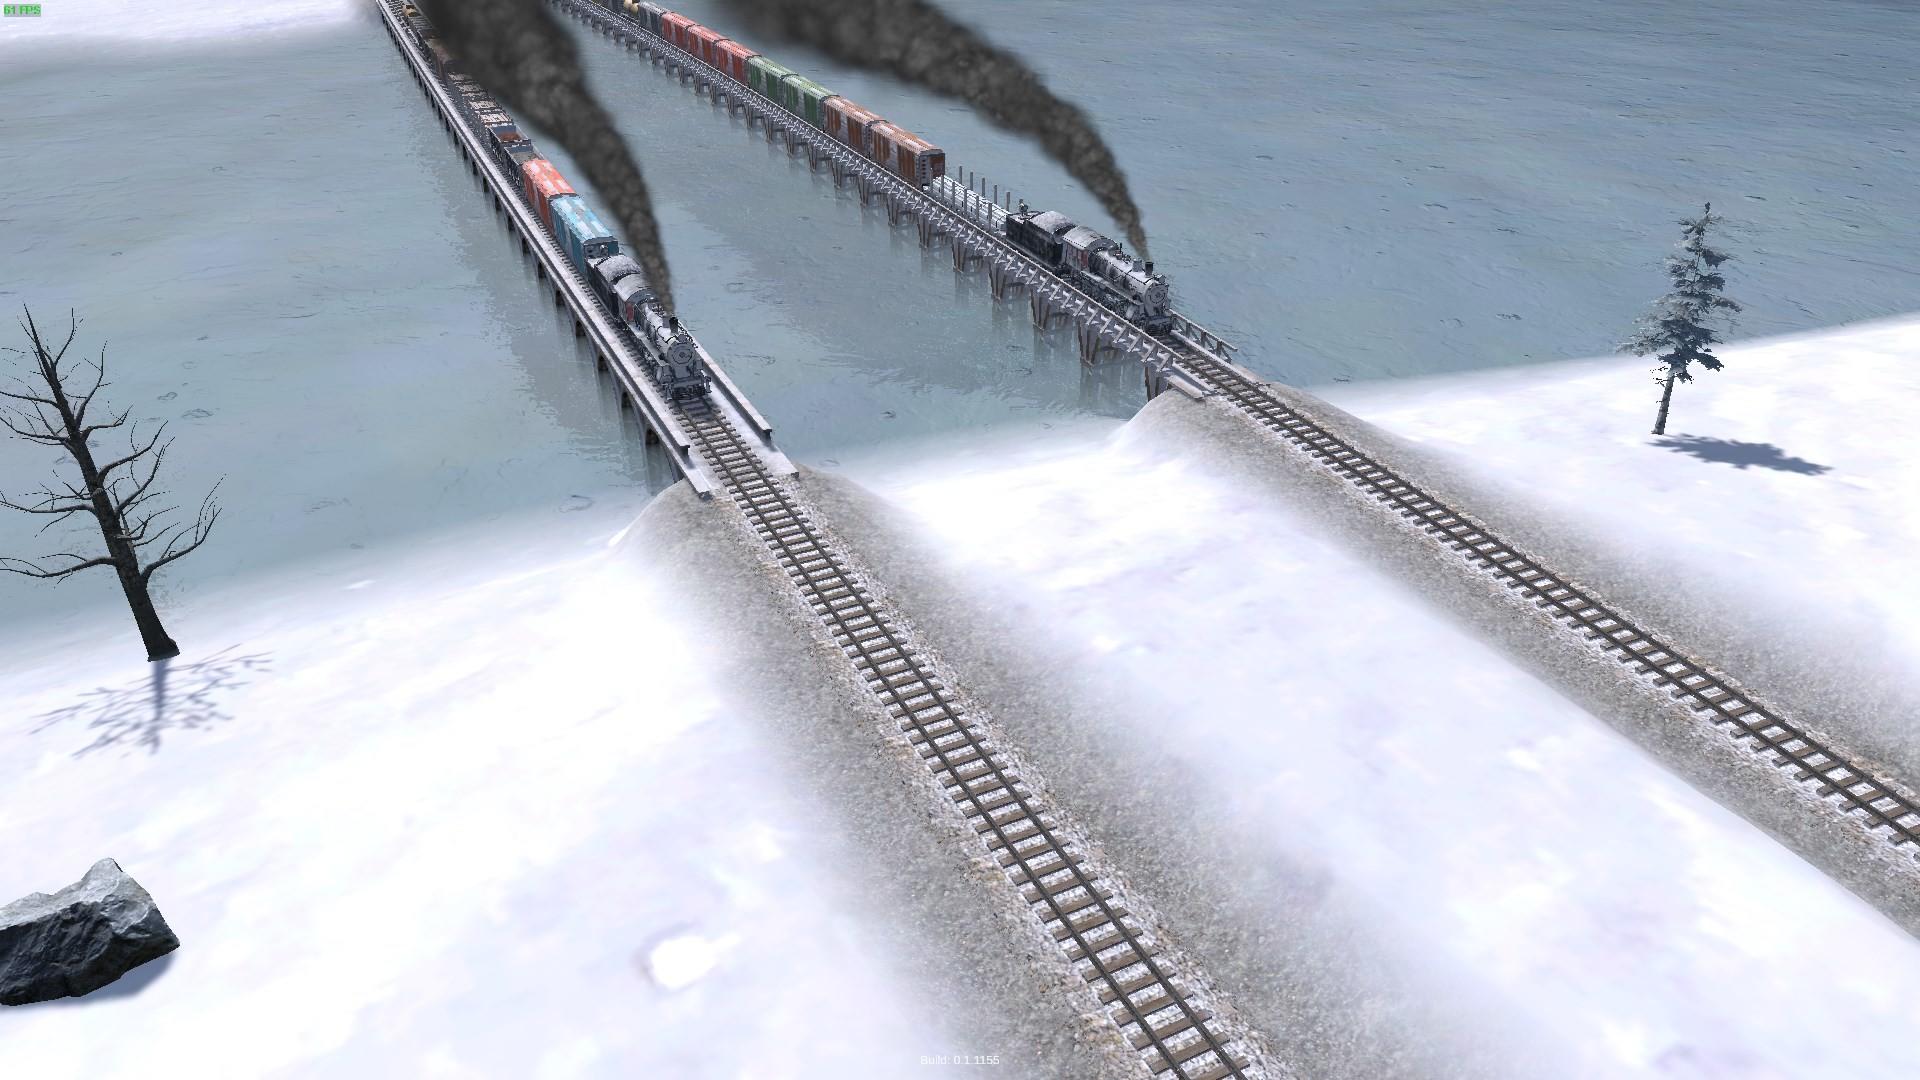 Railroad Corporation 2 screenshot game